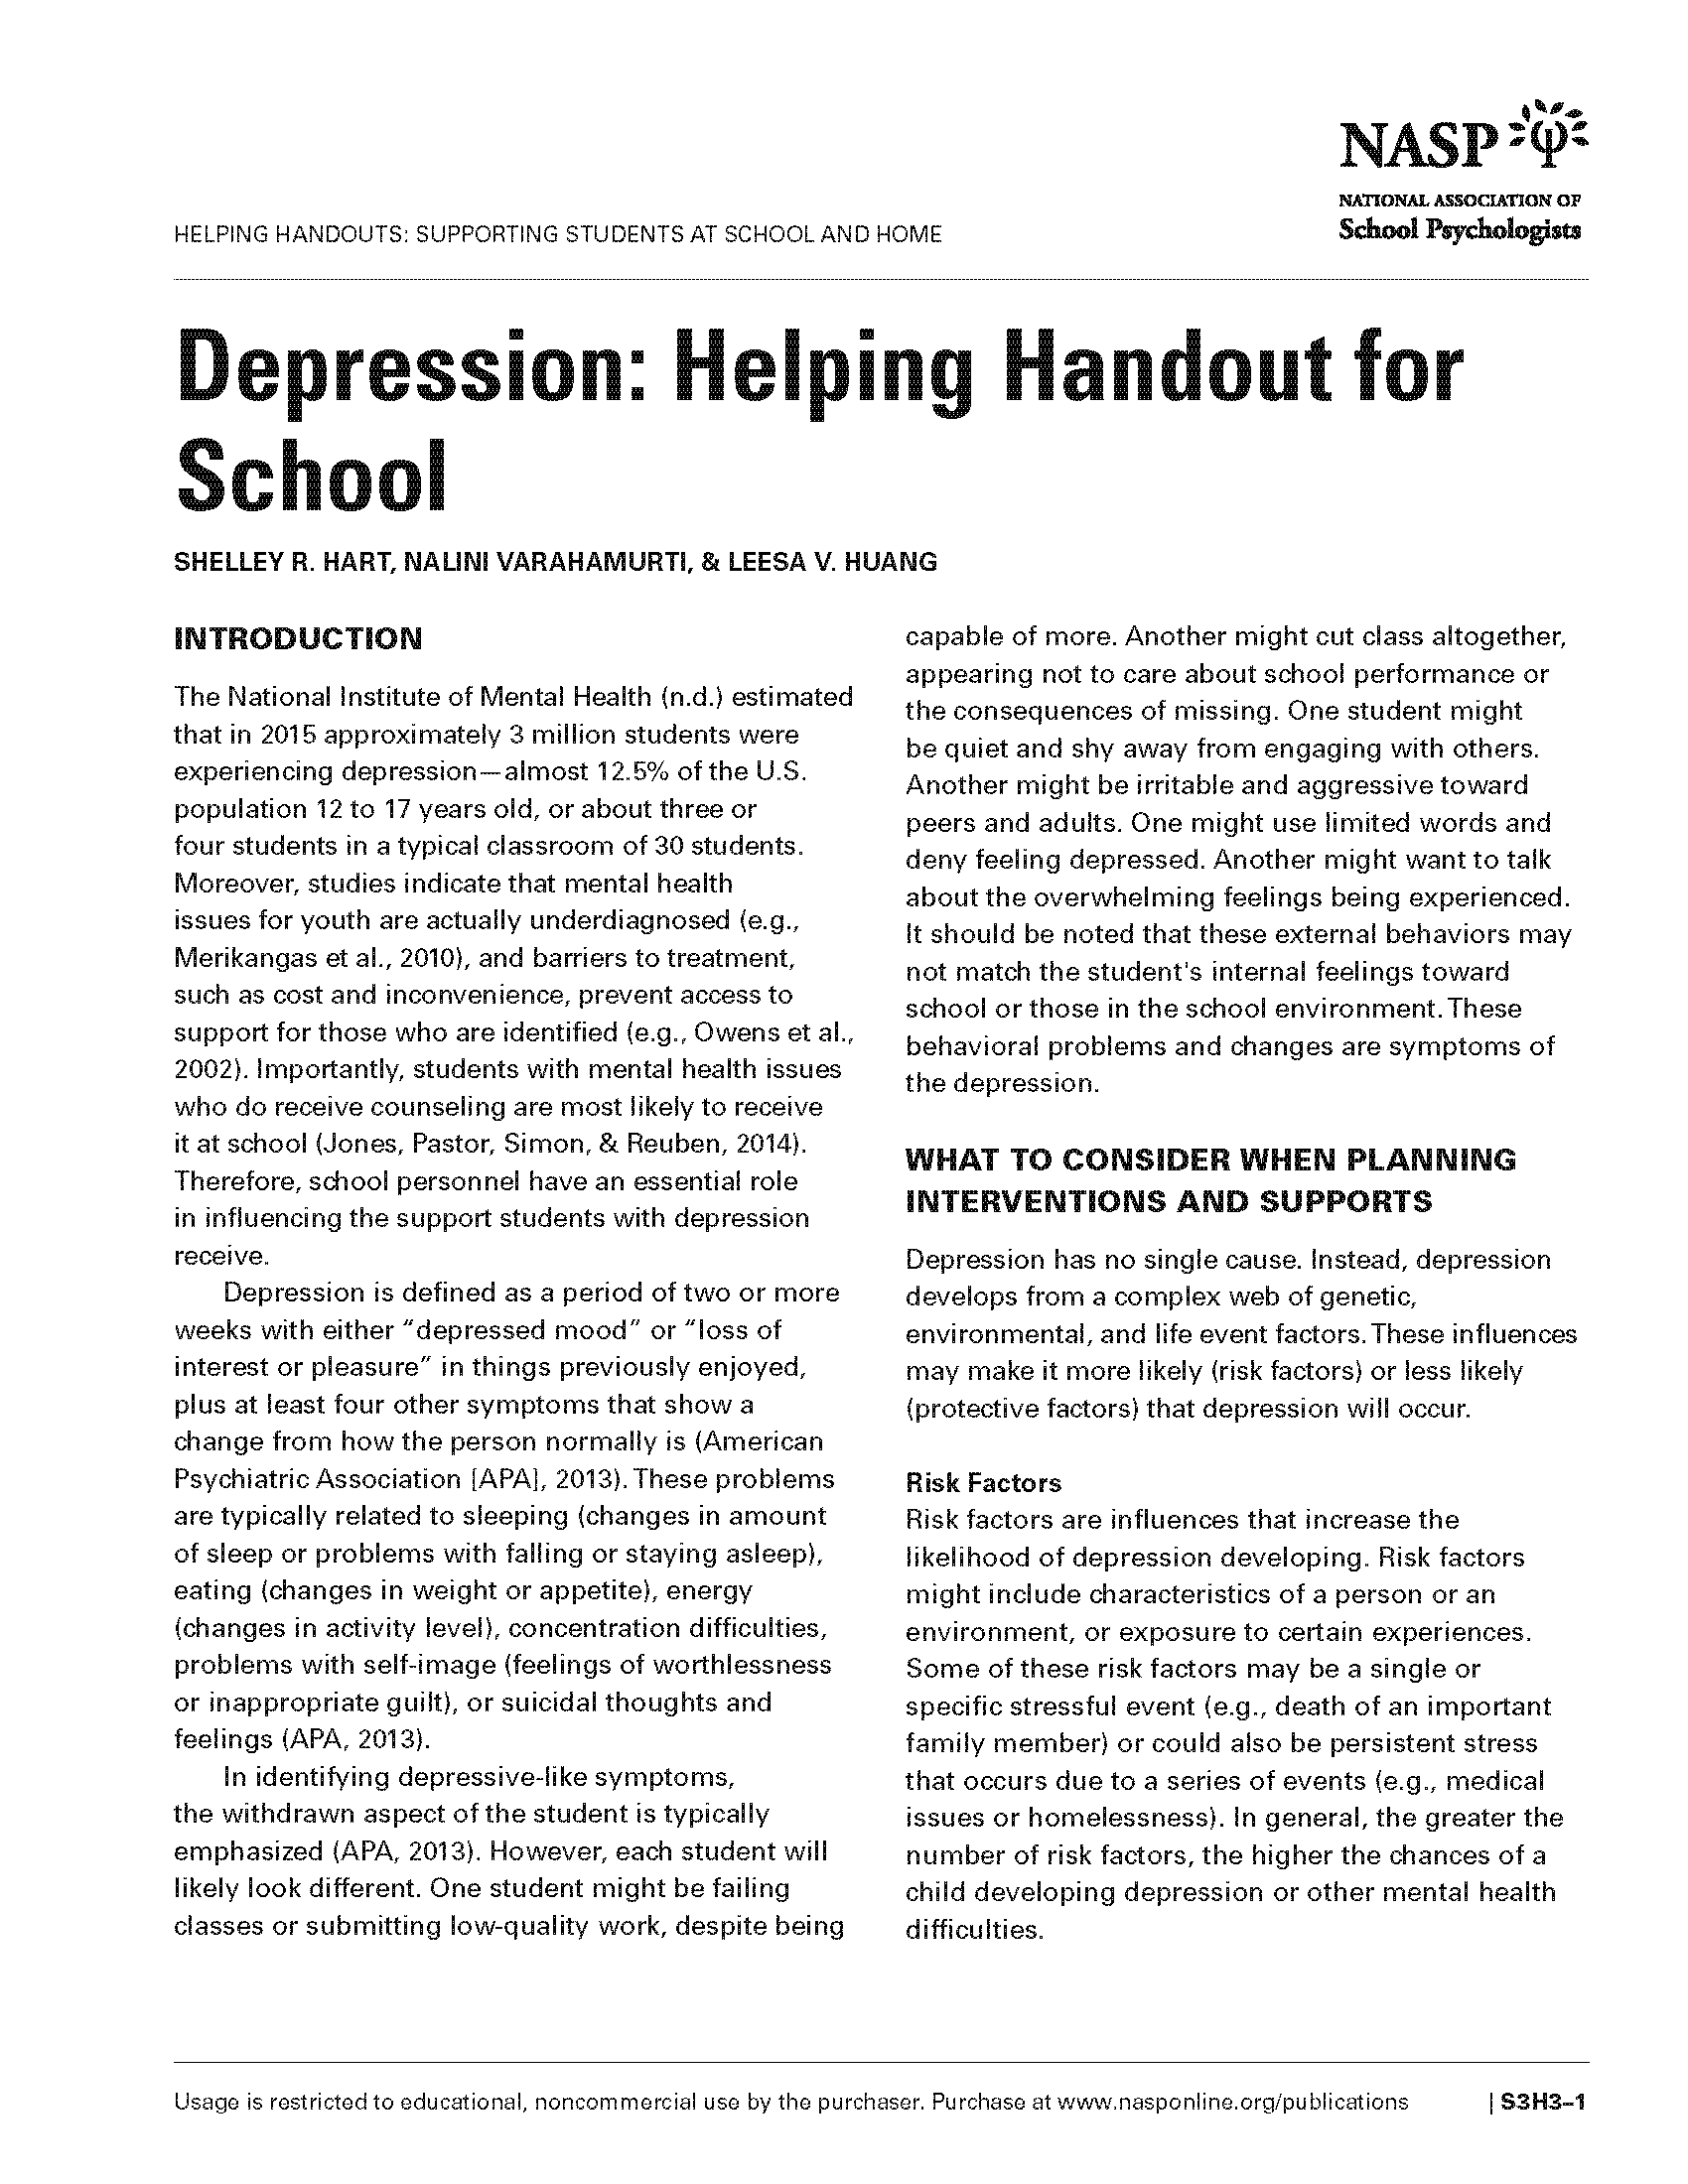 Depression: Helping Handout for School